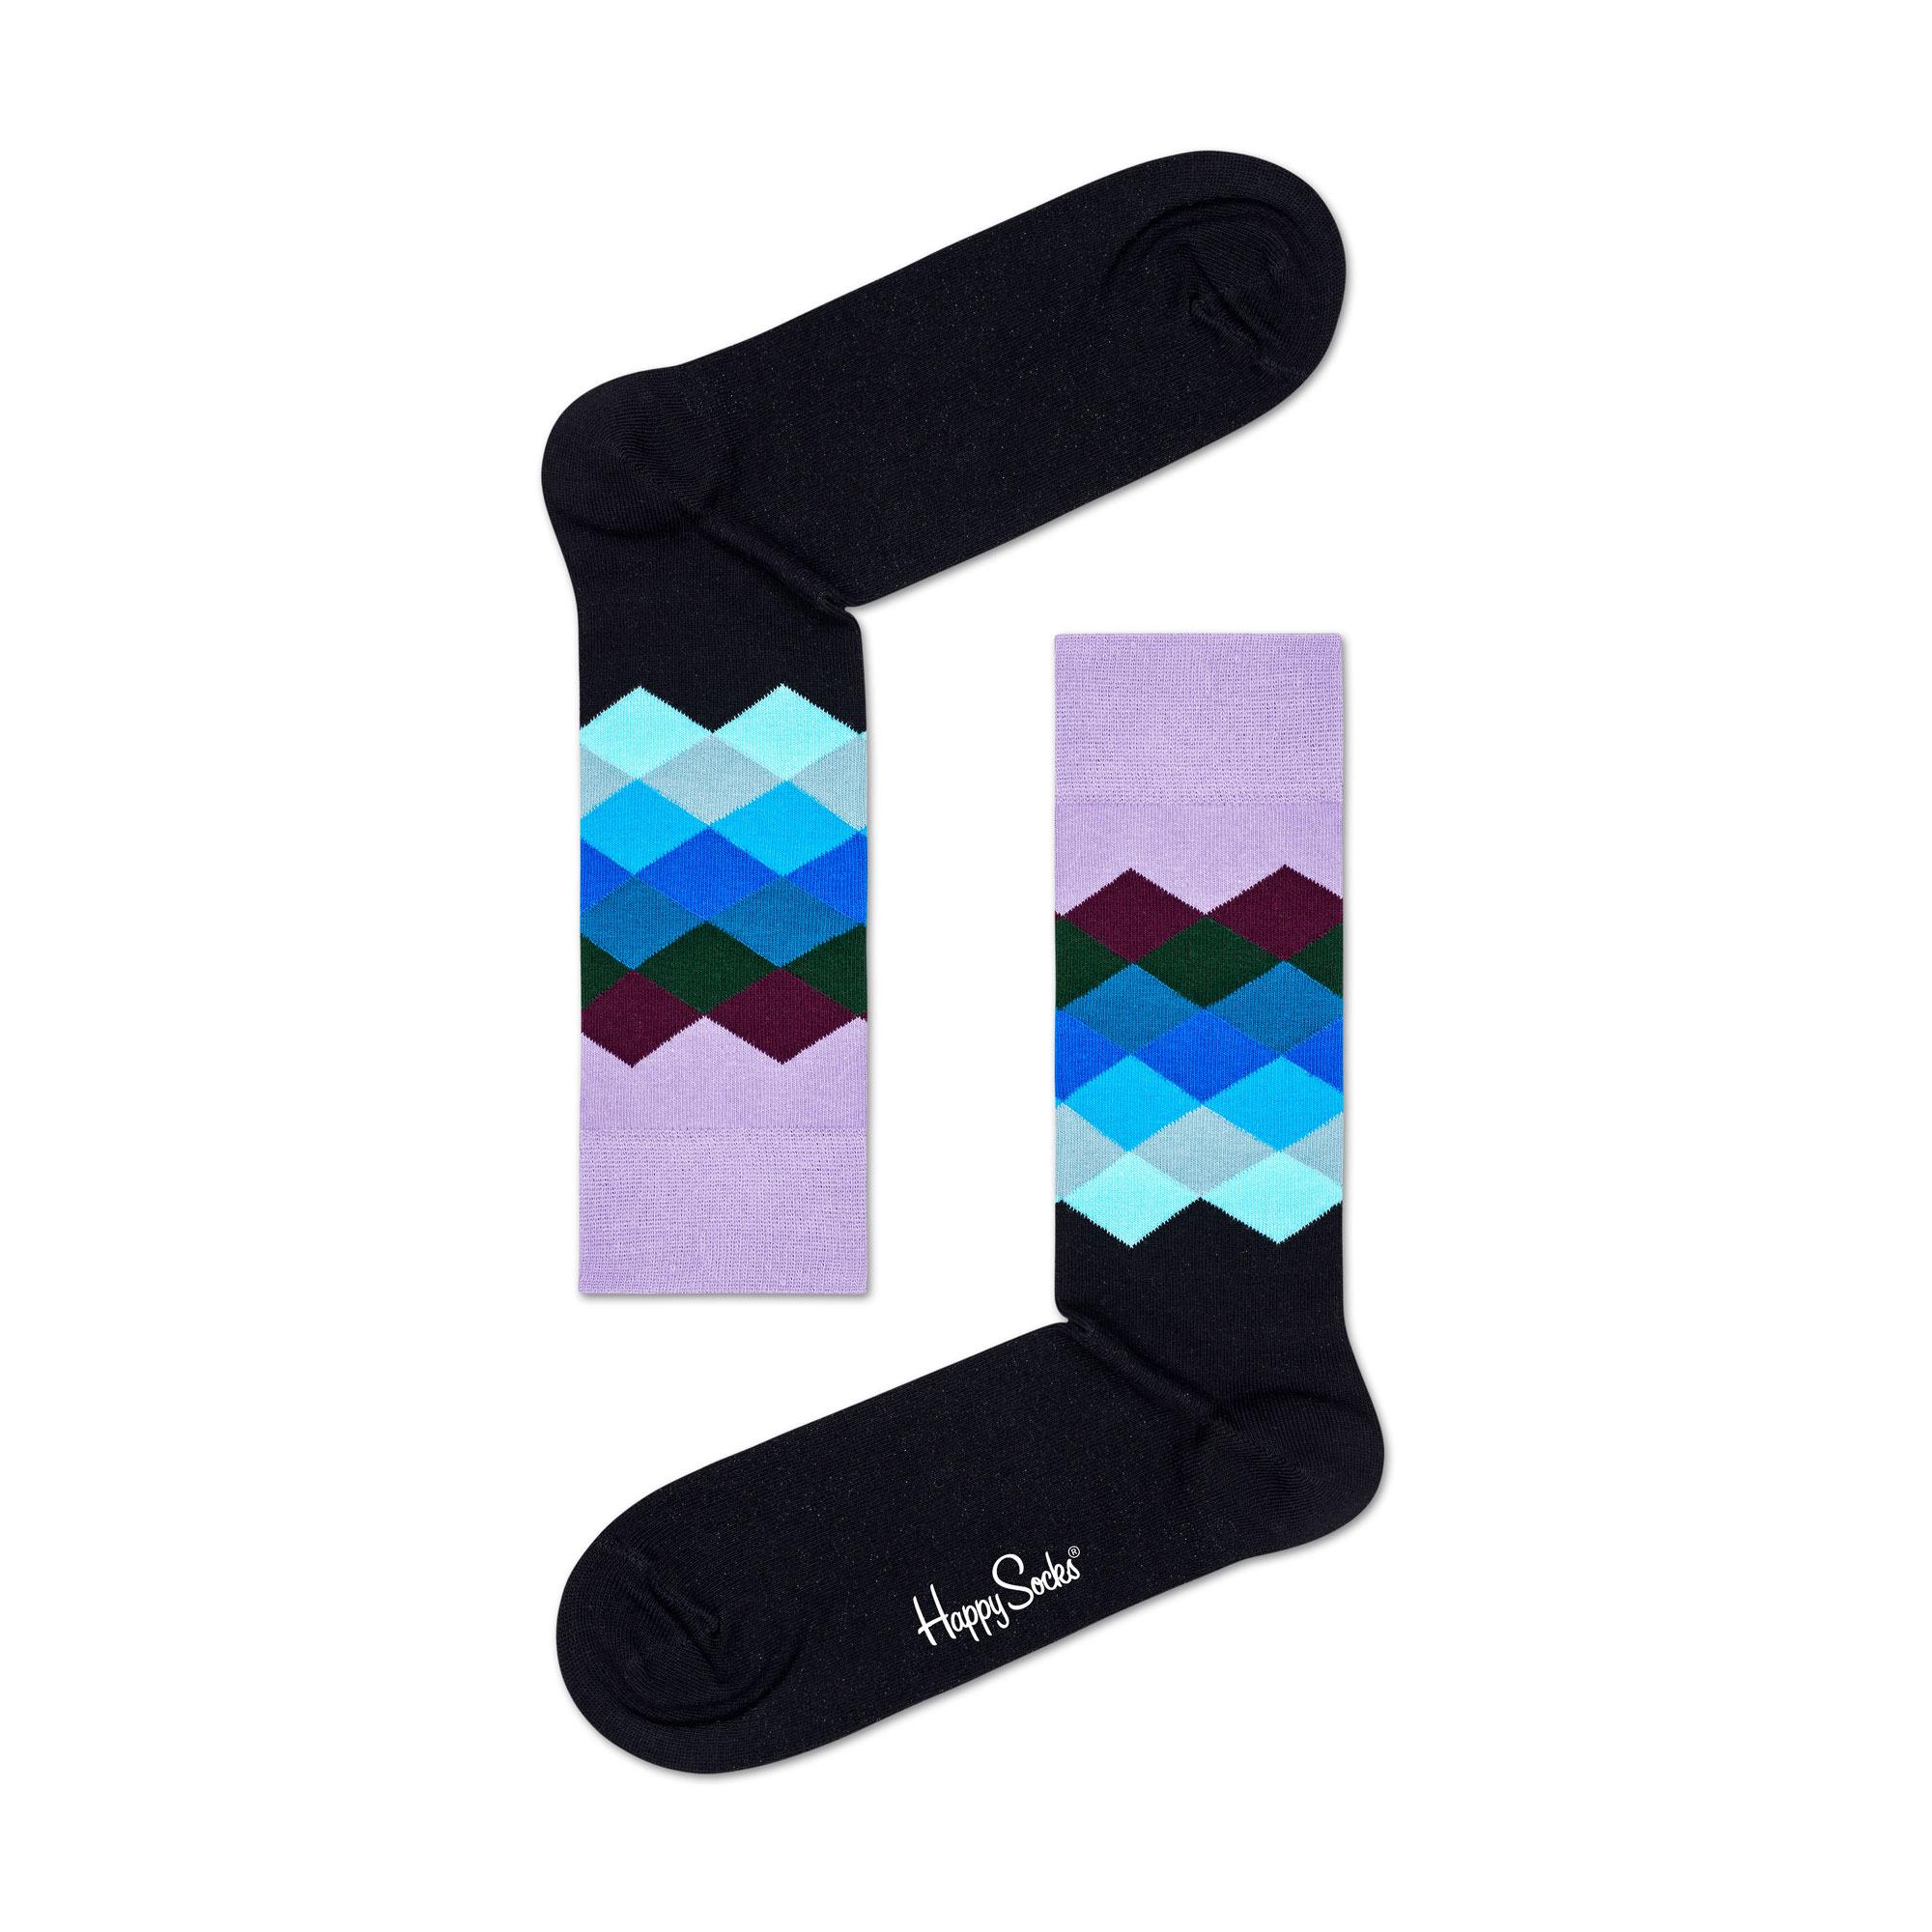 Four-Pack Classic Multi-colour Socks